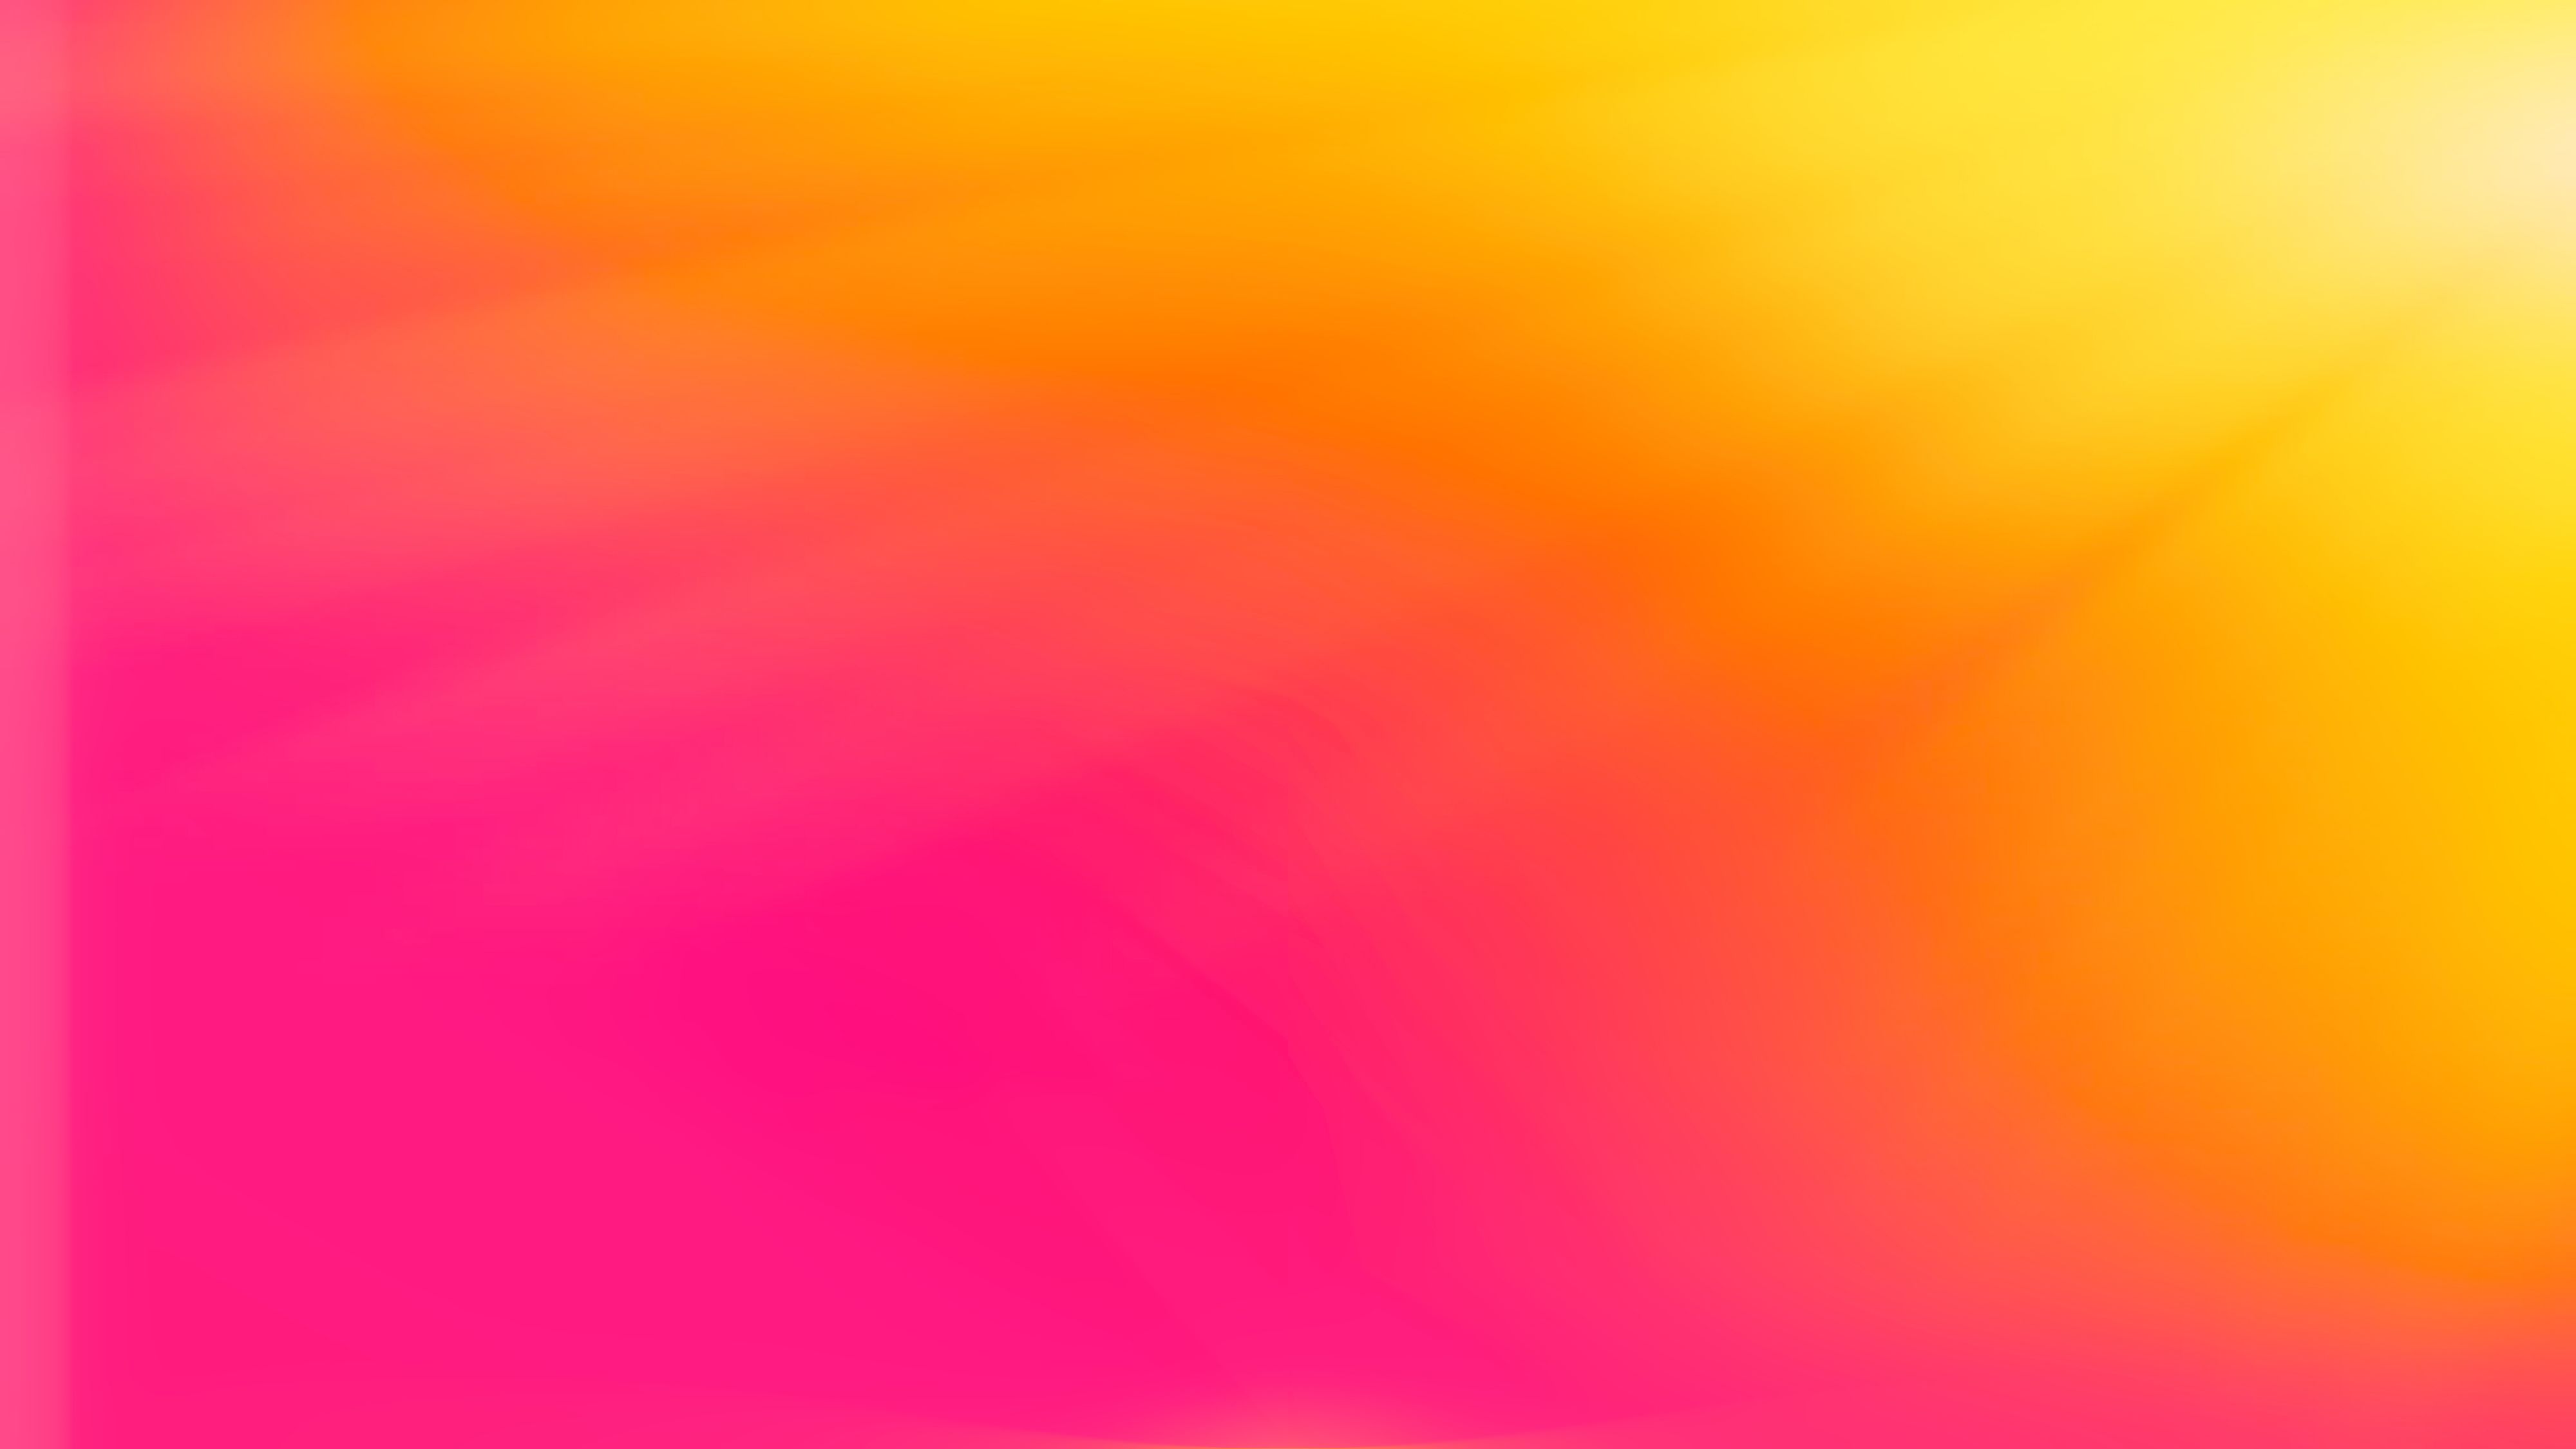 Orange Pink Red Background Image, #design #graphicdesign #creative # wallpaper #backgrou. Free background image, Red background image, Background image